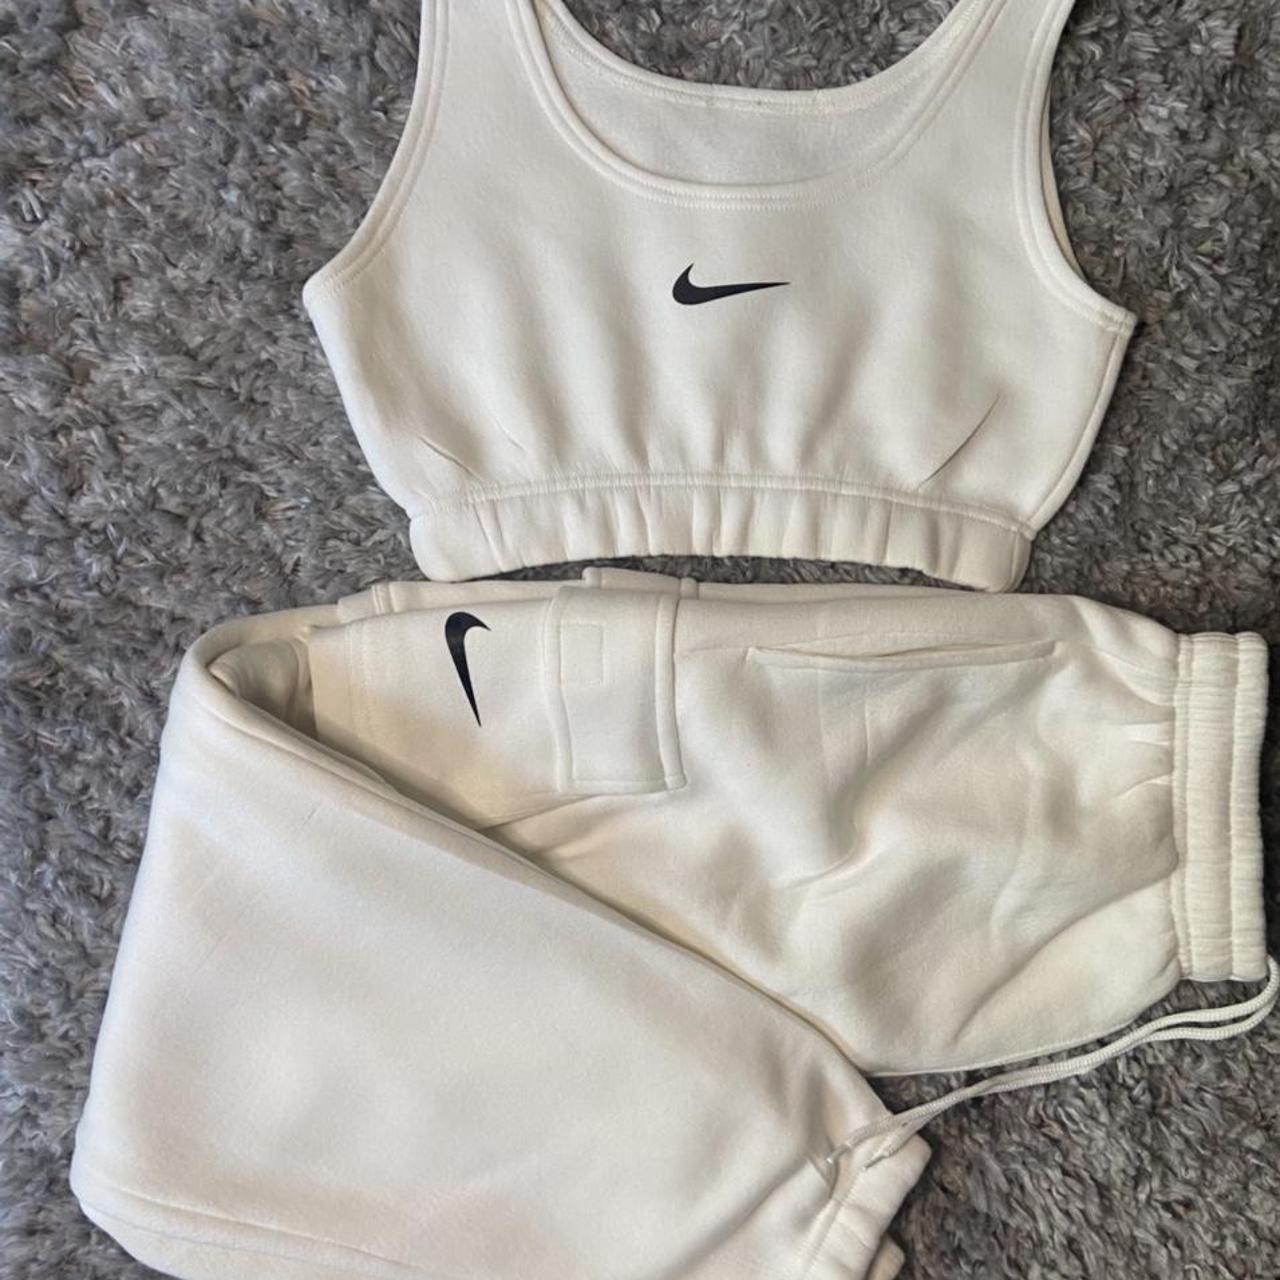 Nike set| Nike lounge set|women’s Nike track suit|... - Depop